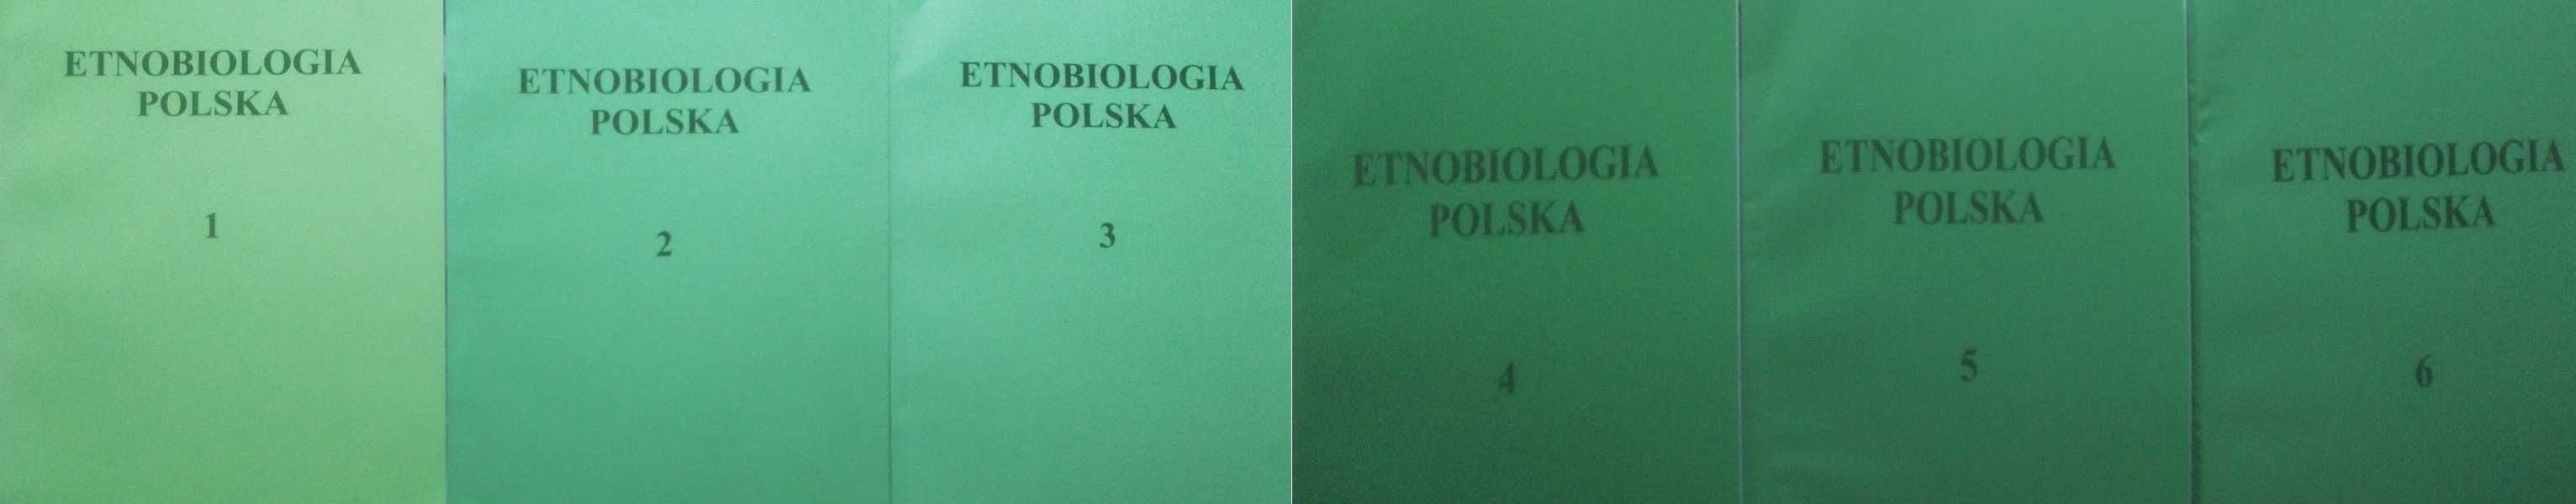 Etnobiologia Polska Rozprawy naukowe tom 1-6 Komplet